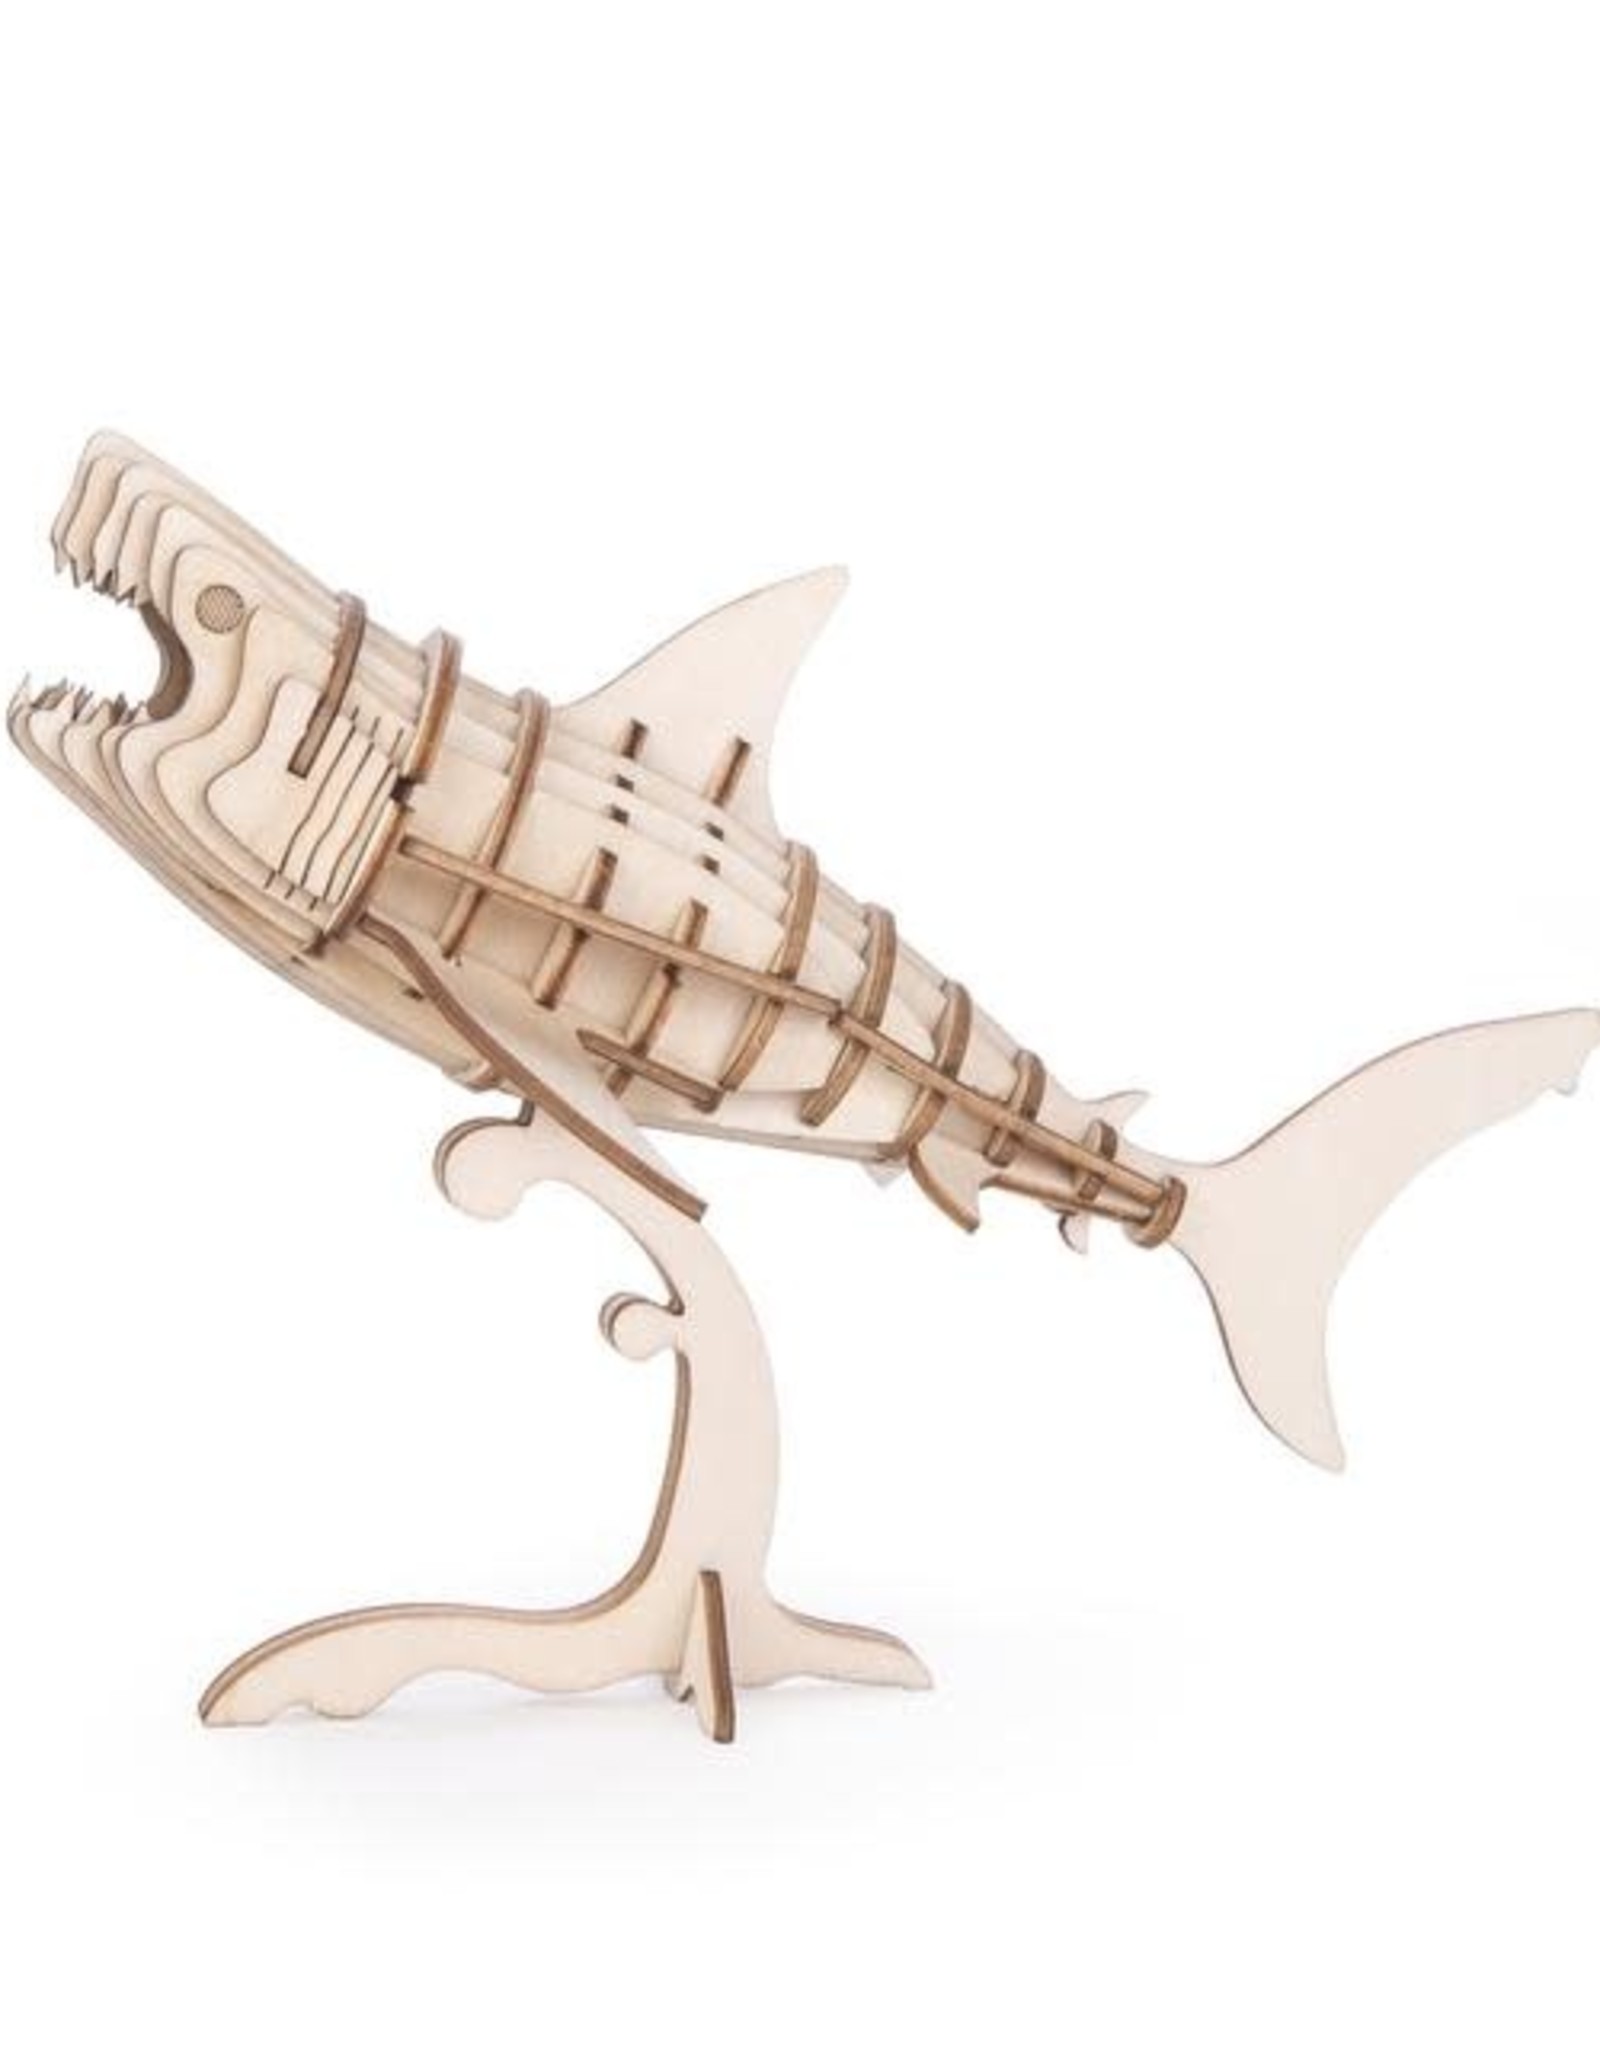 Kikkerland Shark 3D Wooden Puzzle